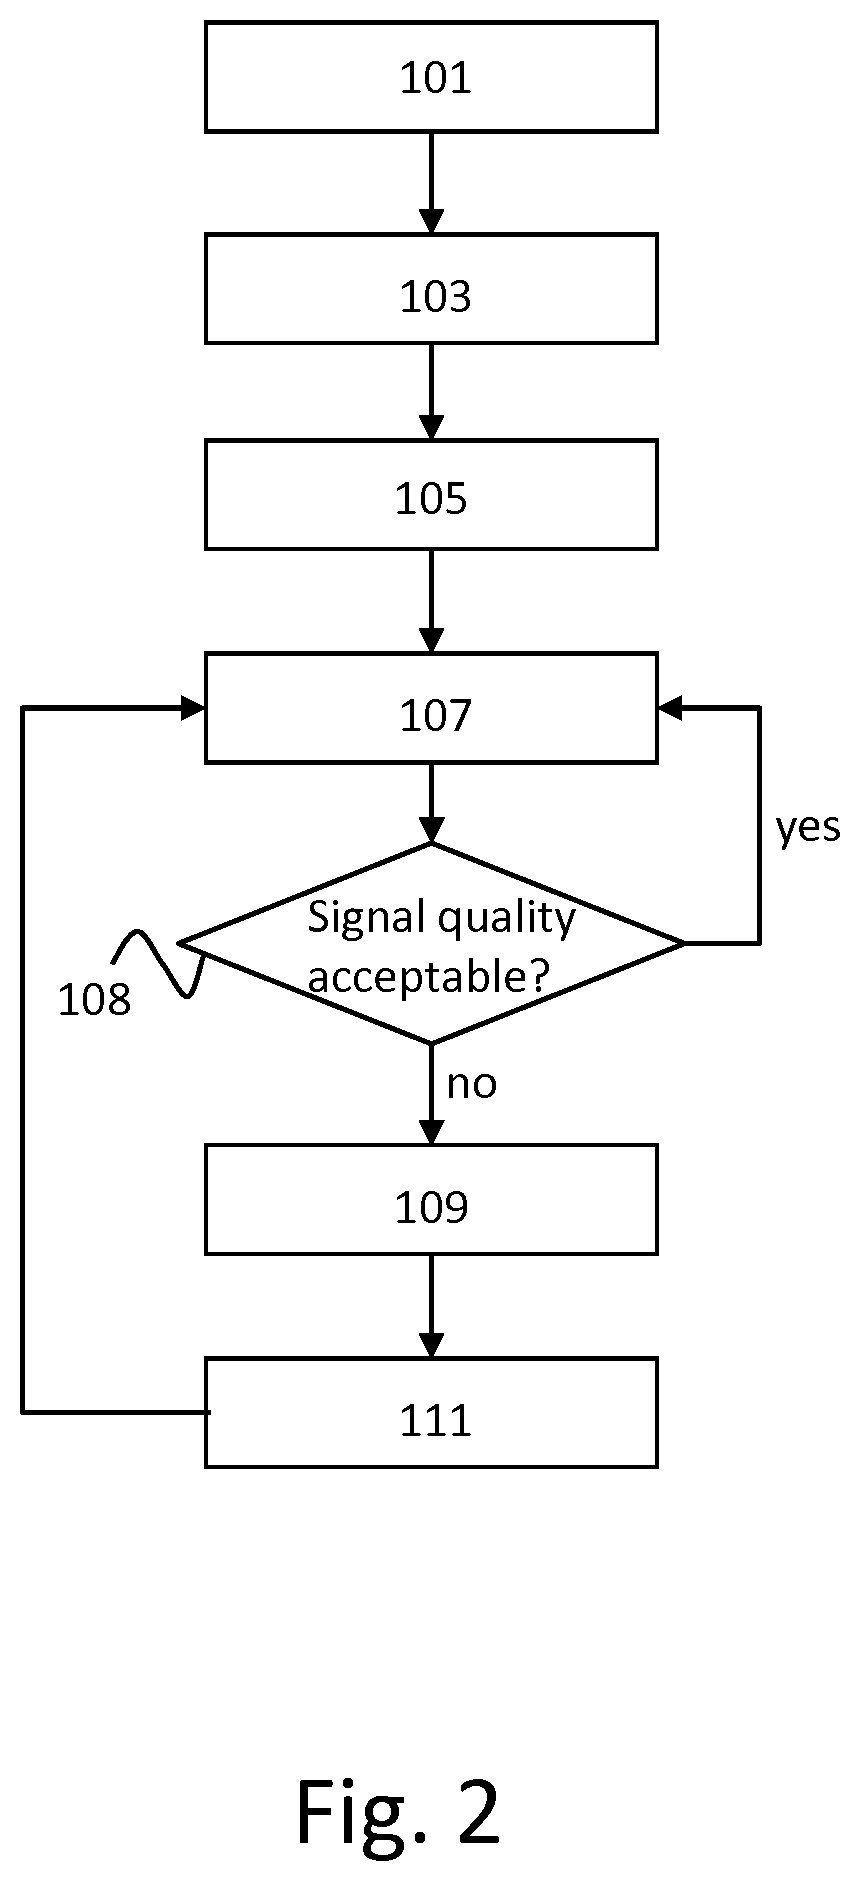 Determining Light Settings and/or Daylight Blocker Settings Based on Data Signal Quality